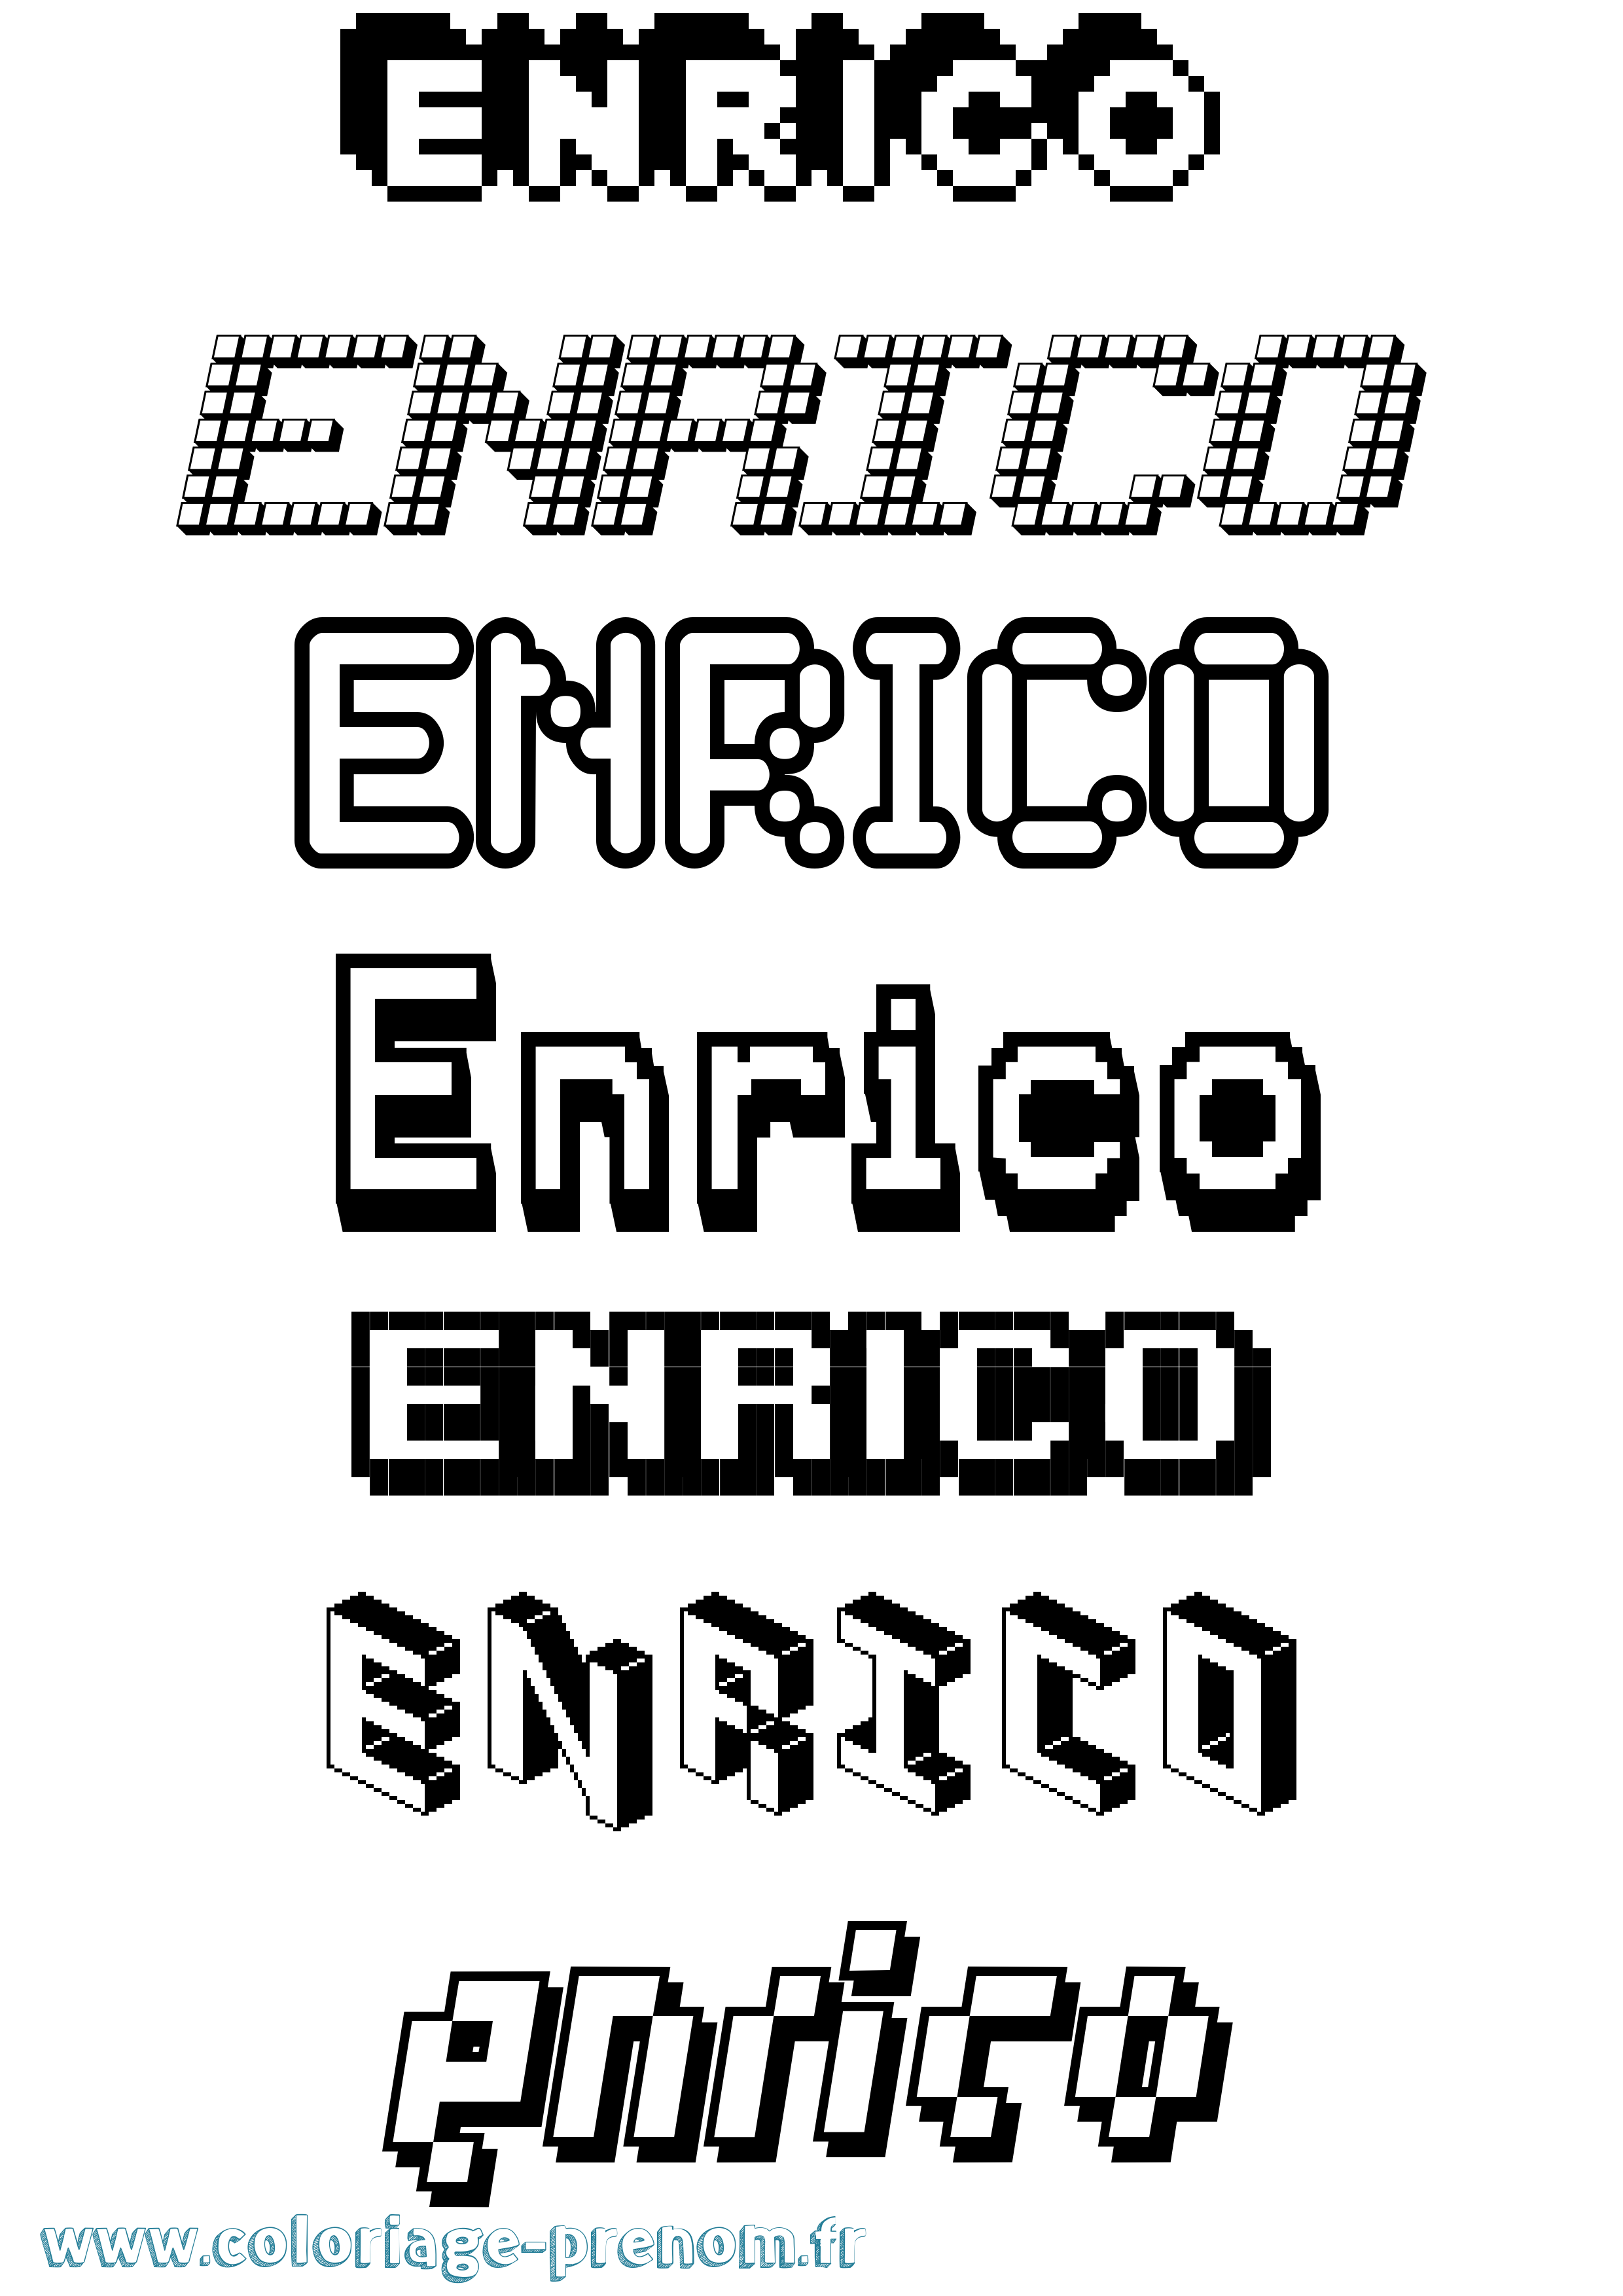 Coloriage prénom Enrico Pixel